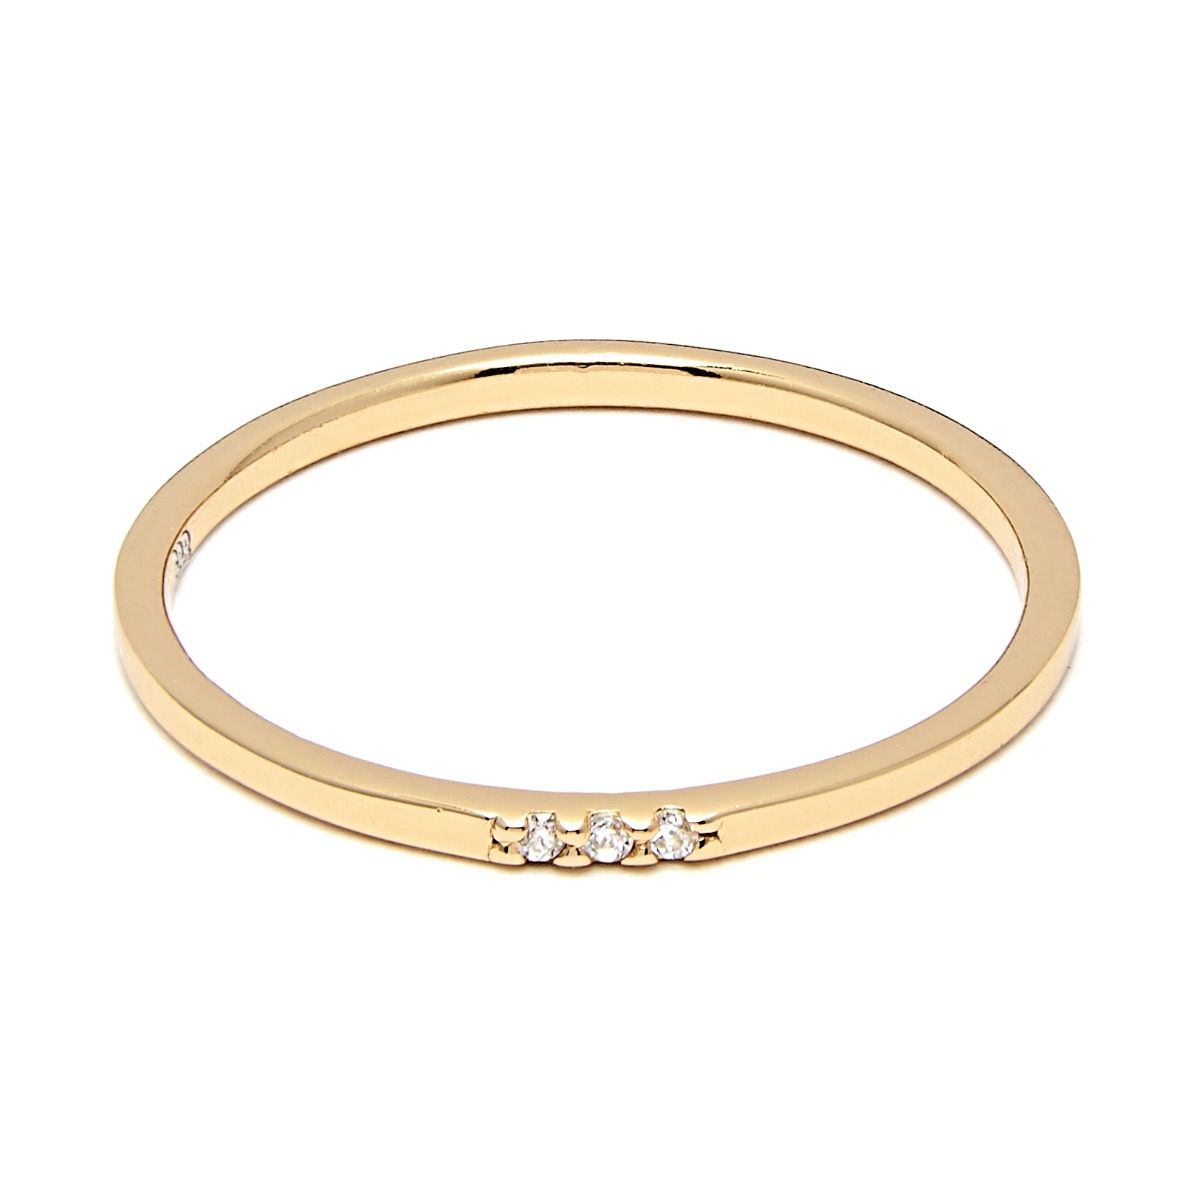 Shania Crystal Thin Band Ring in Gold